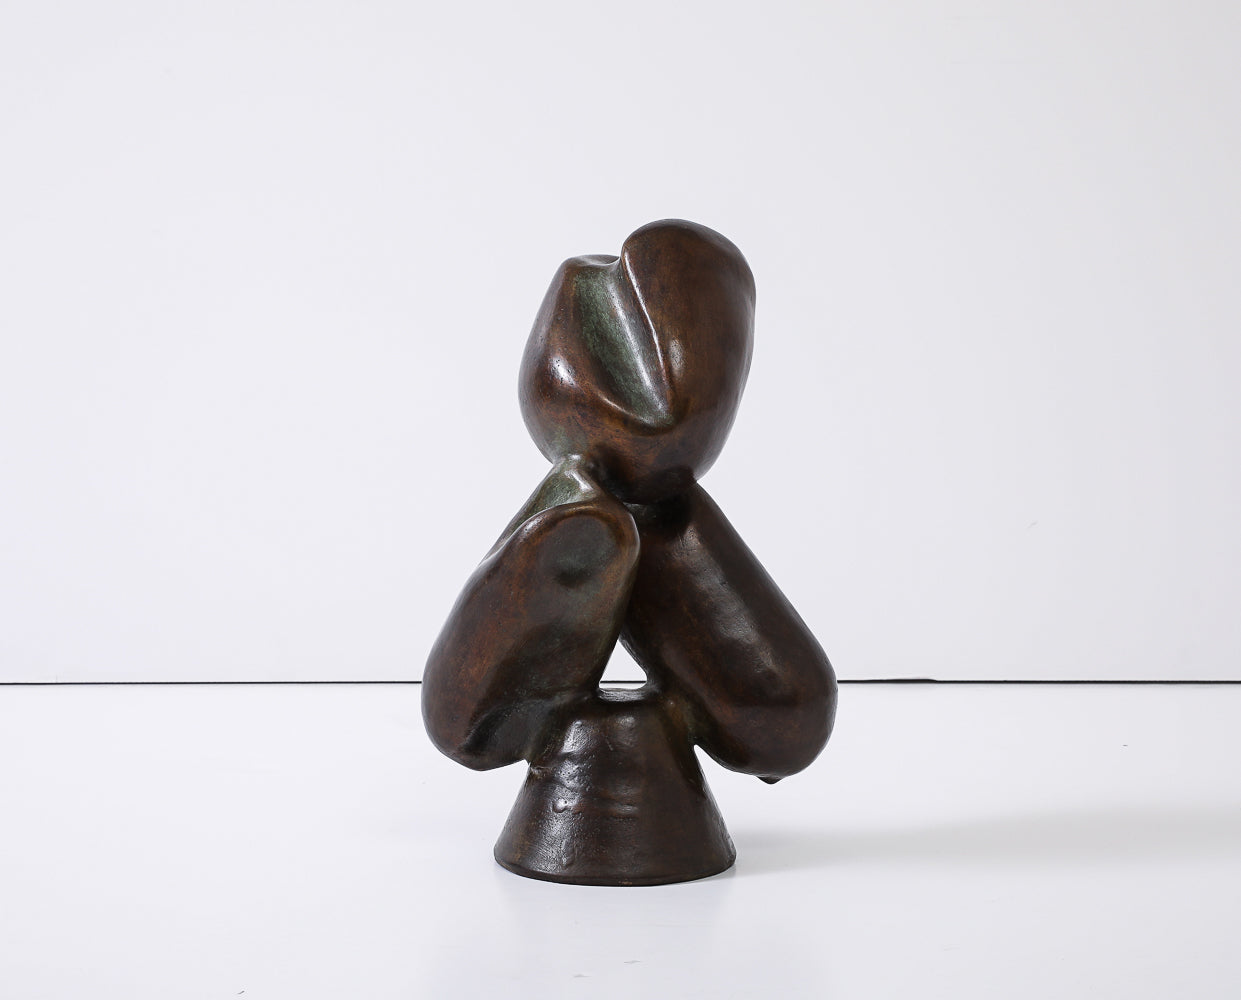 4 Piece Bronze Assemblage Sculpture #1 by David Haskell